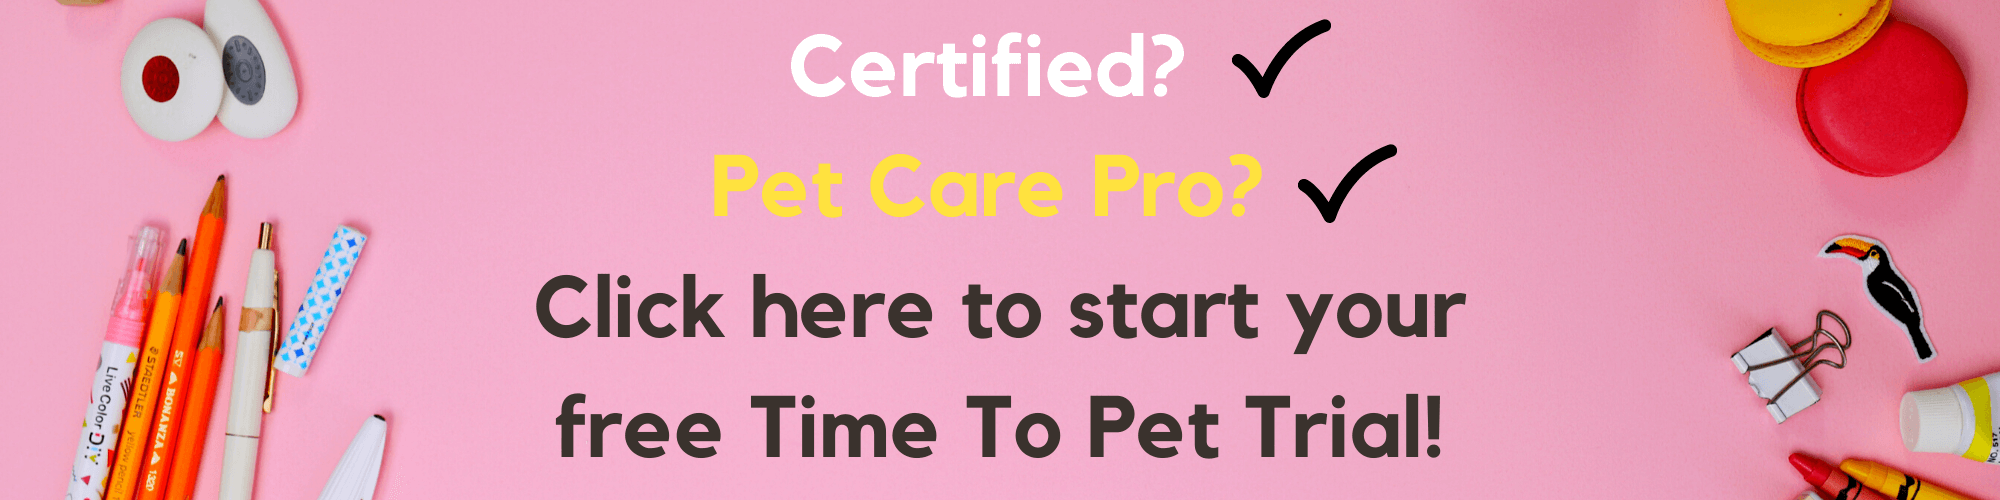 Free-Trial-CTA-pet-sitting-certifications